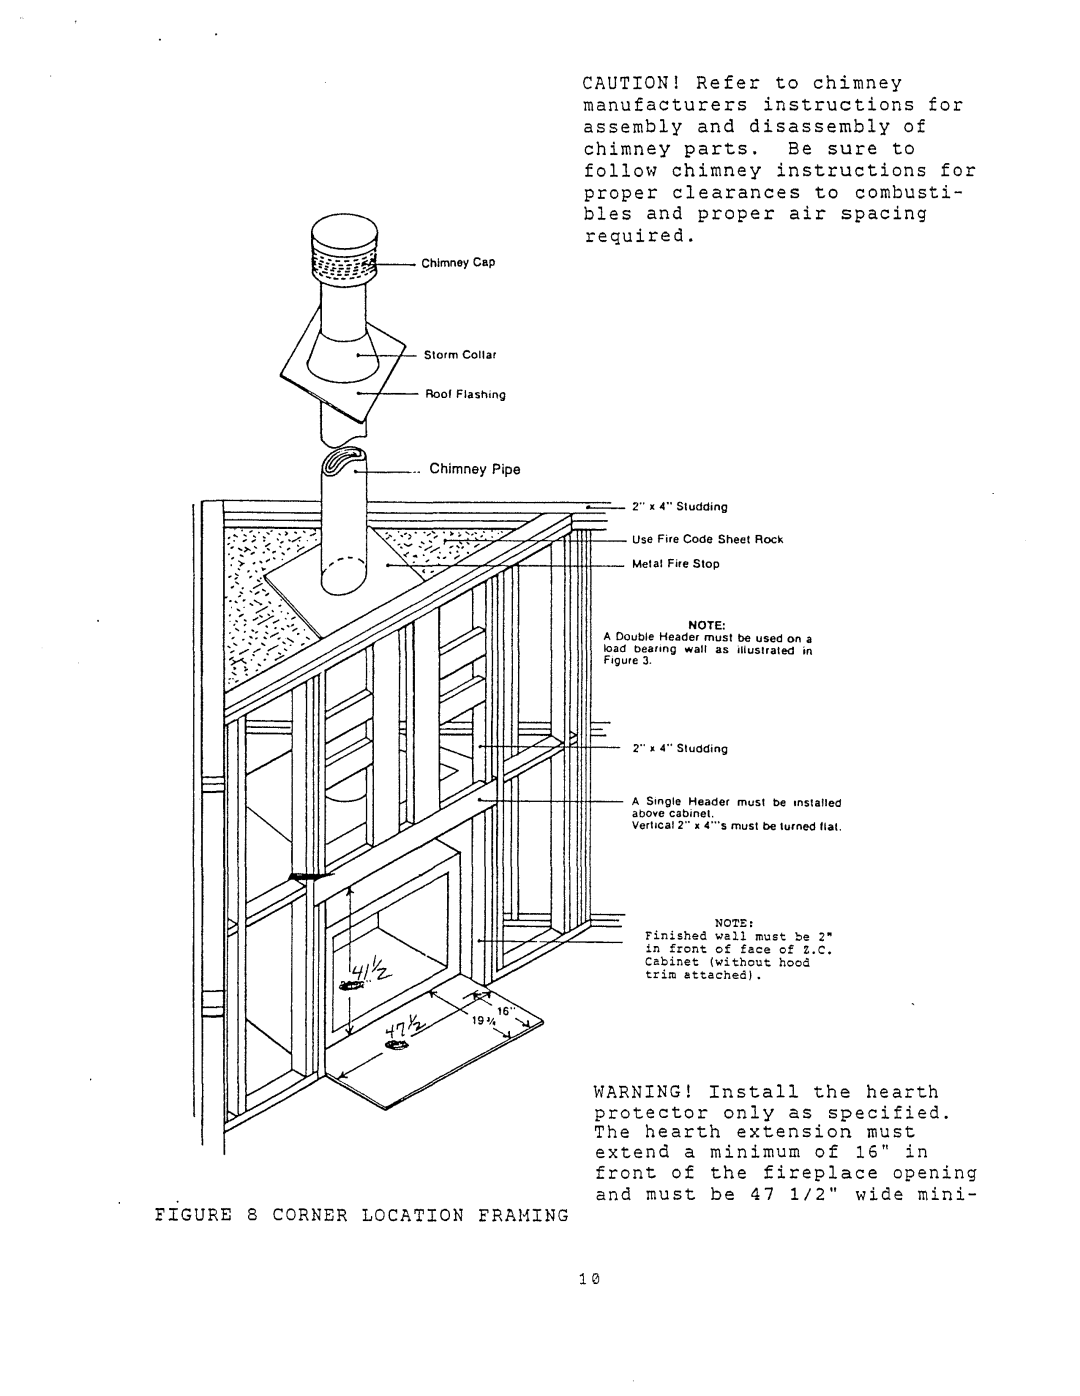 New Buck Corporation 80ZC manual Corner Location Framing 